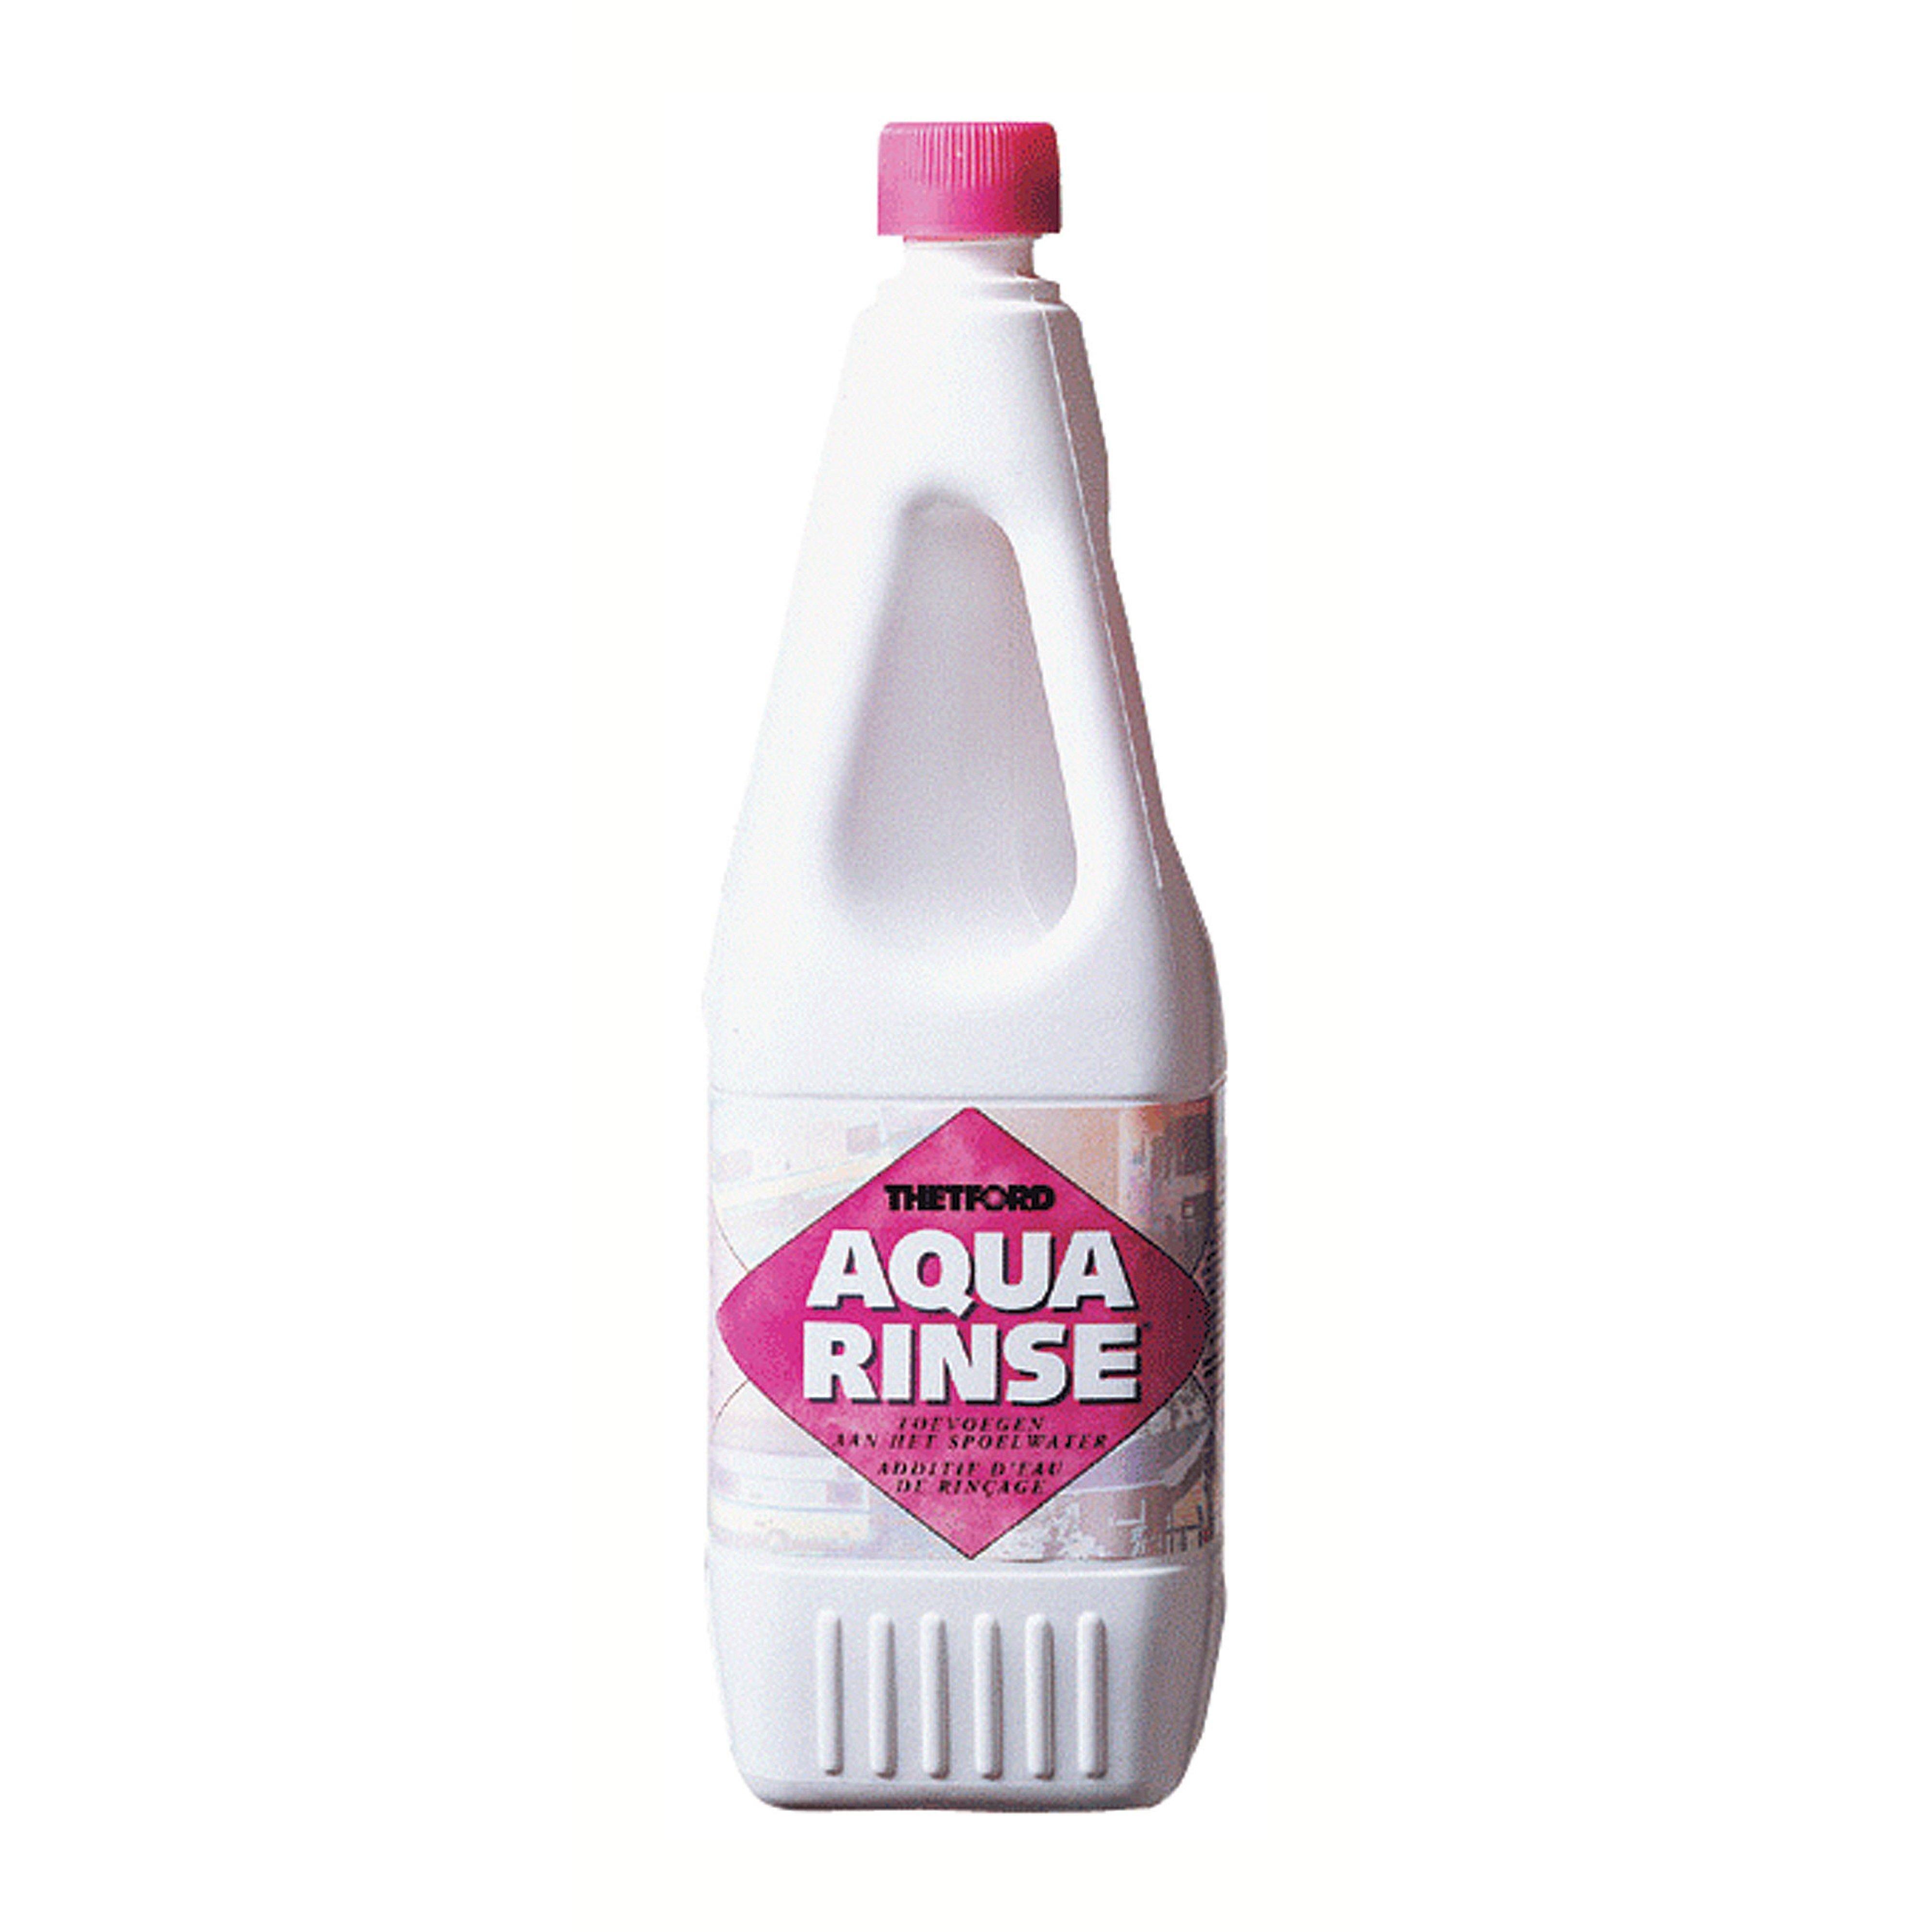 Thetford Aqua Rinse Toilet Fluid Review